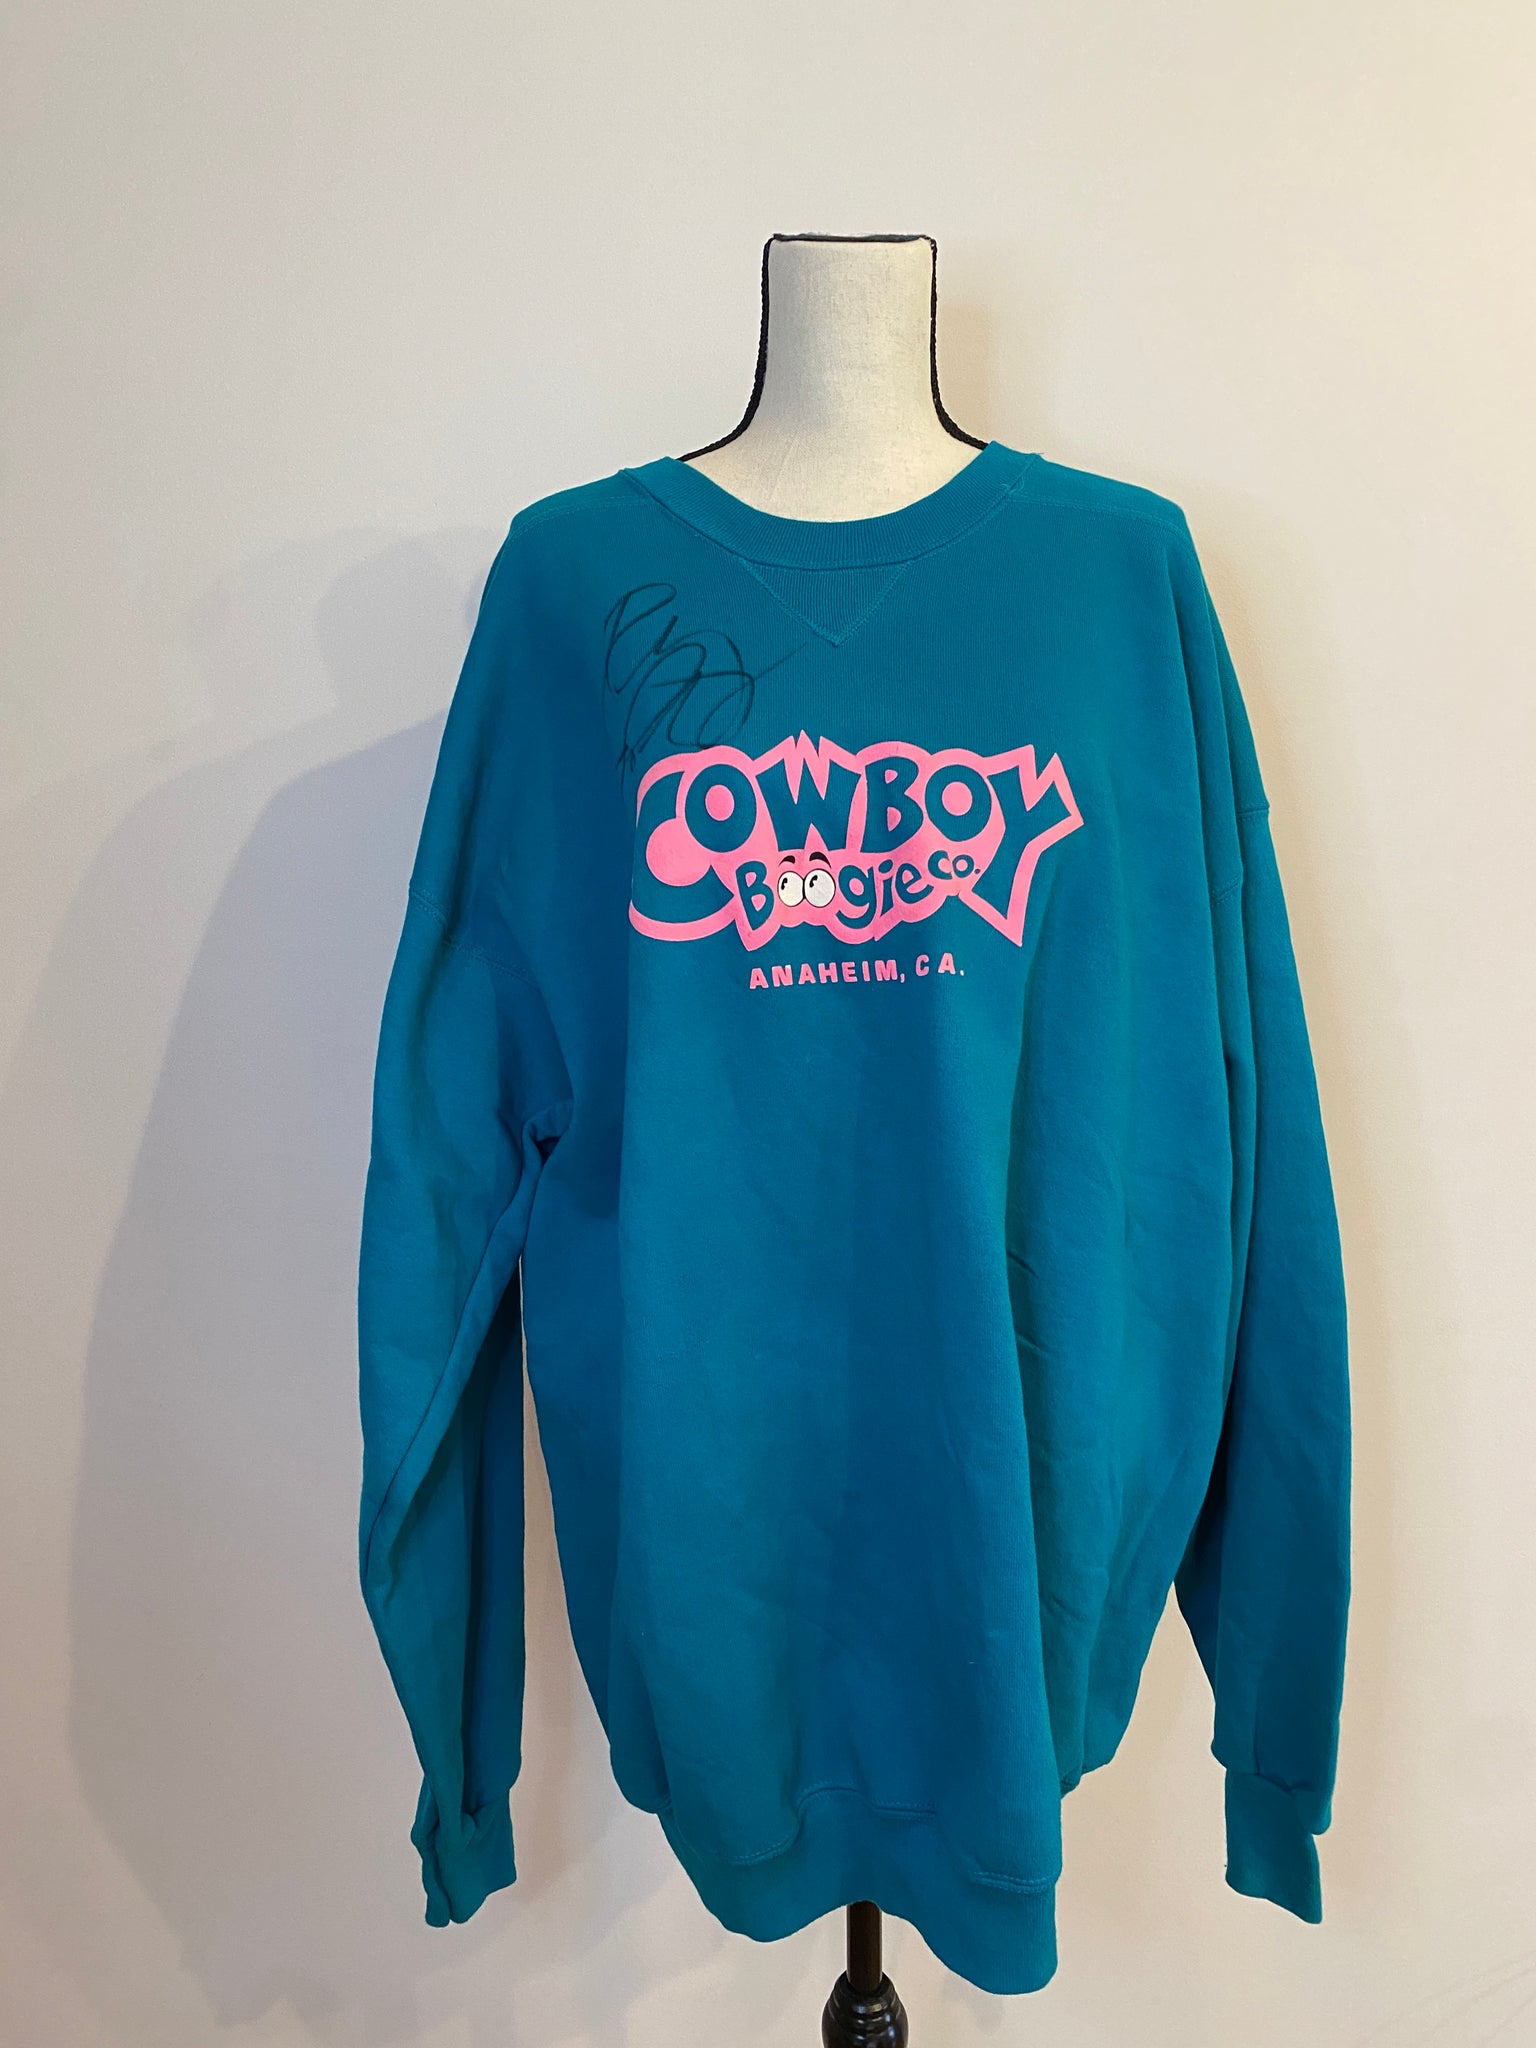 Cowboy Boogie Sweatshirt